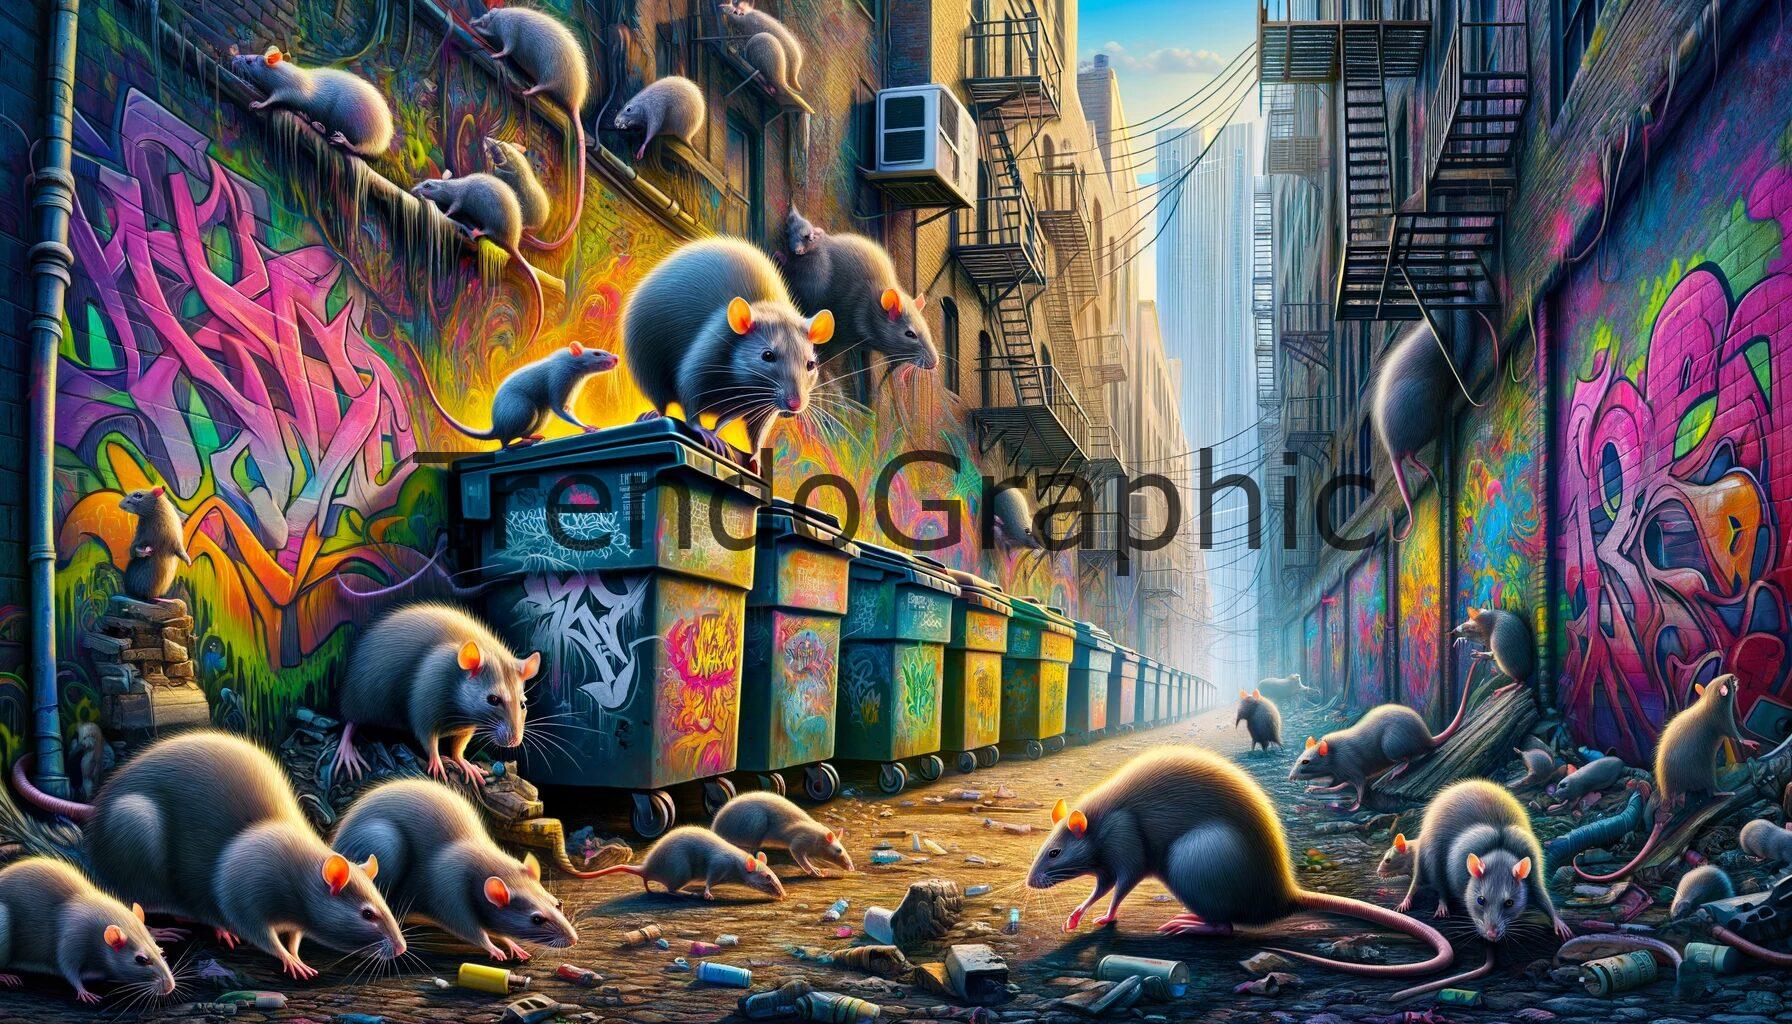 Alley Fantasia: Rats in a Dreamlike Urban Setting